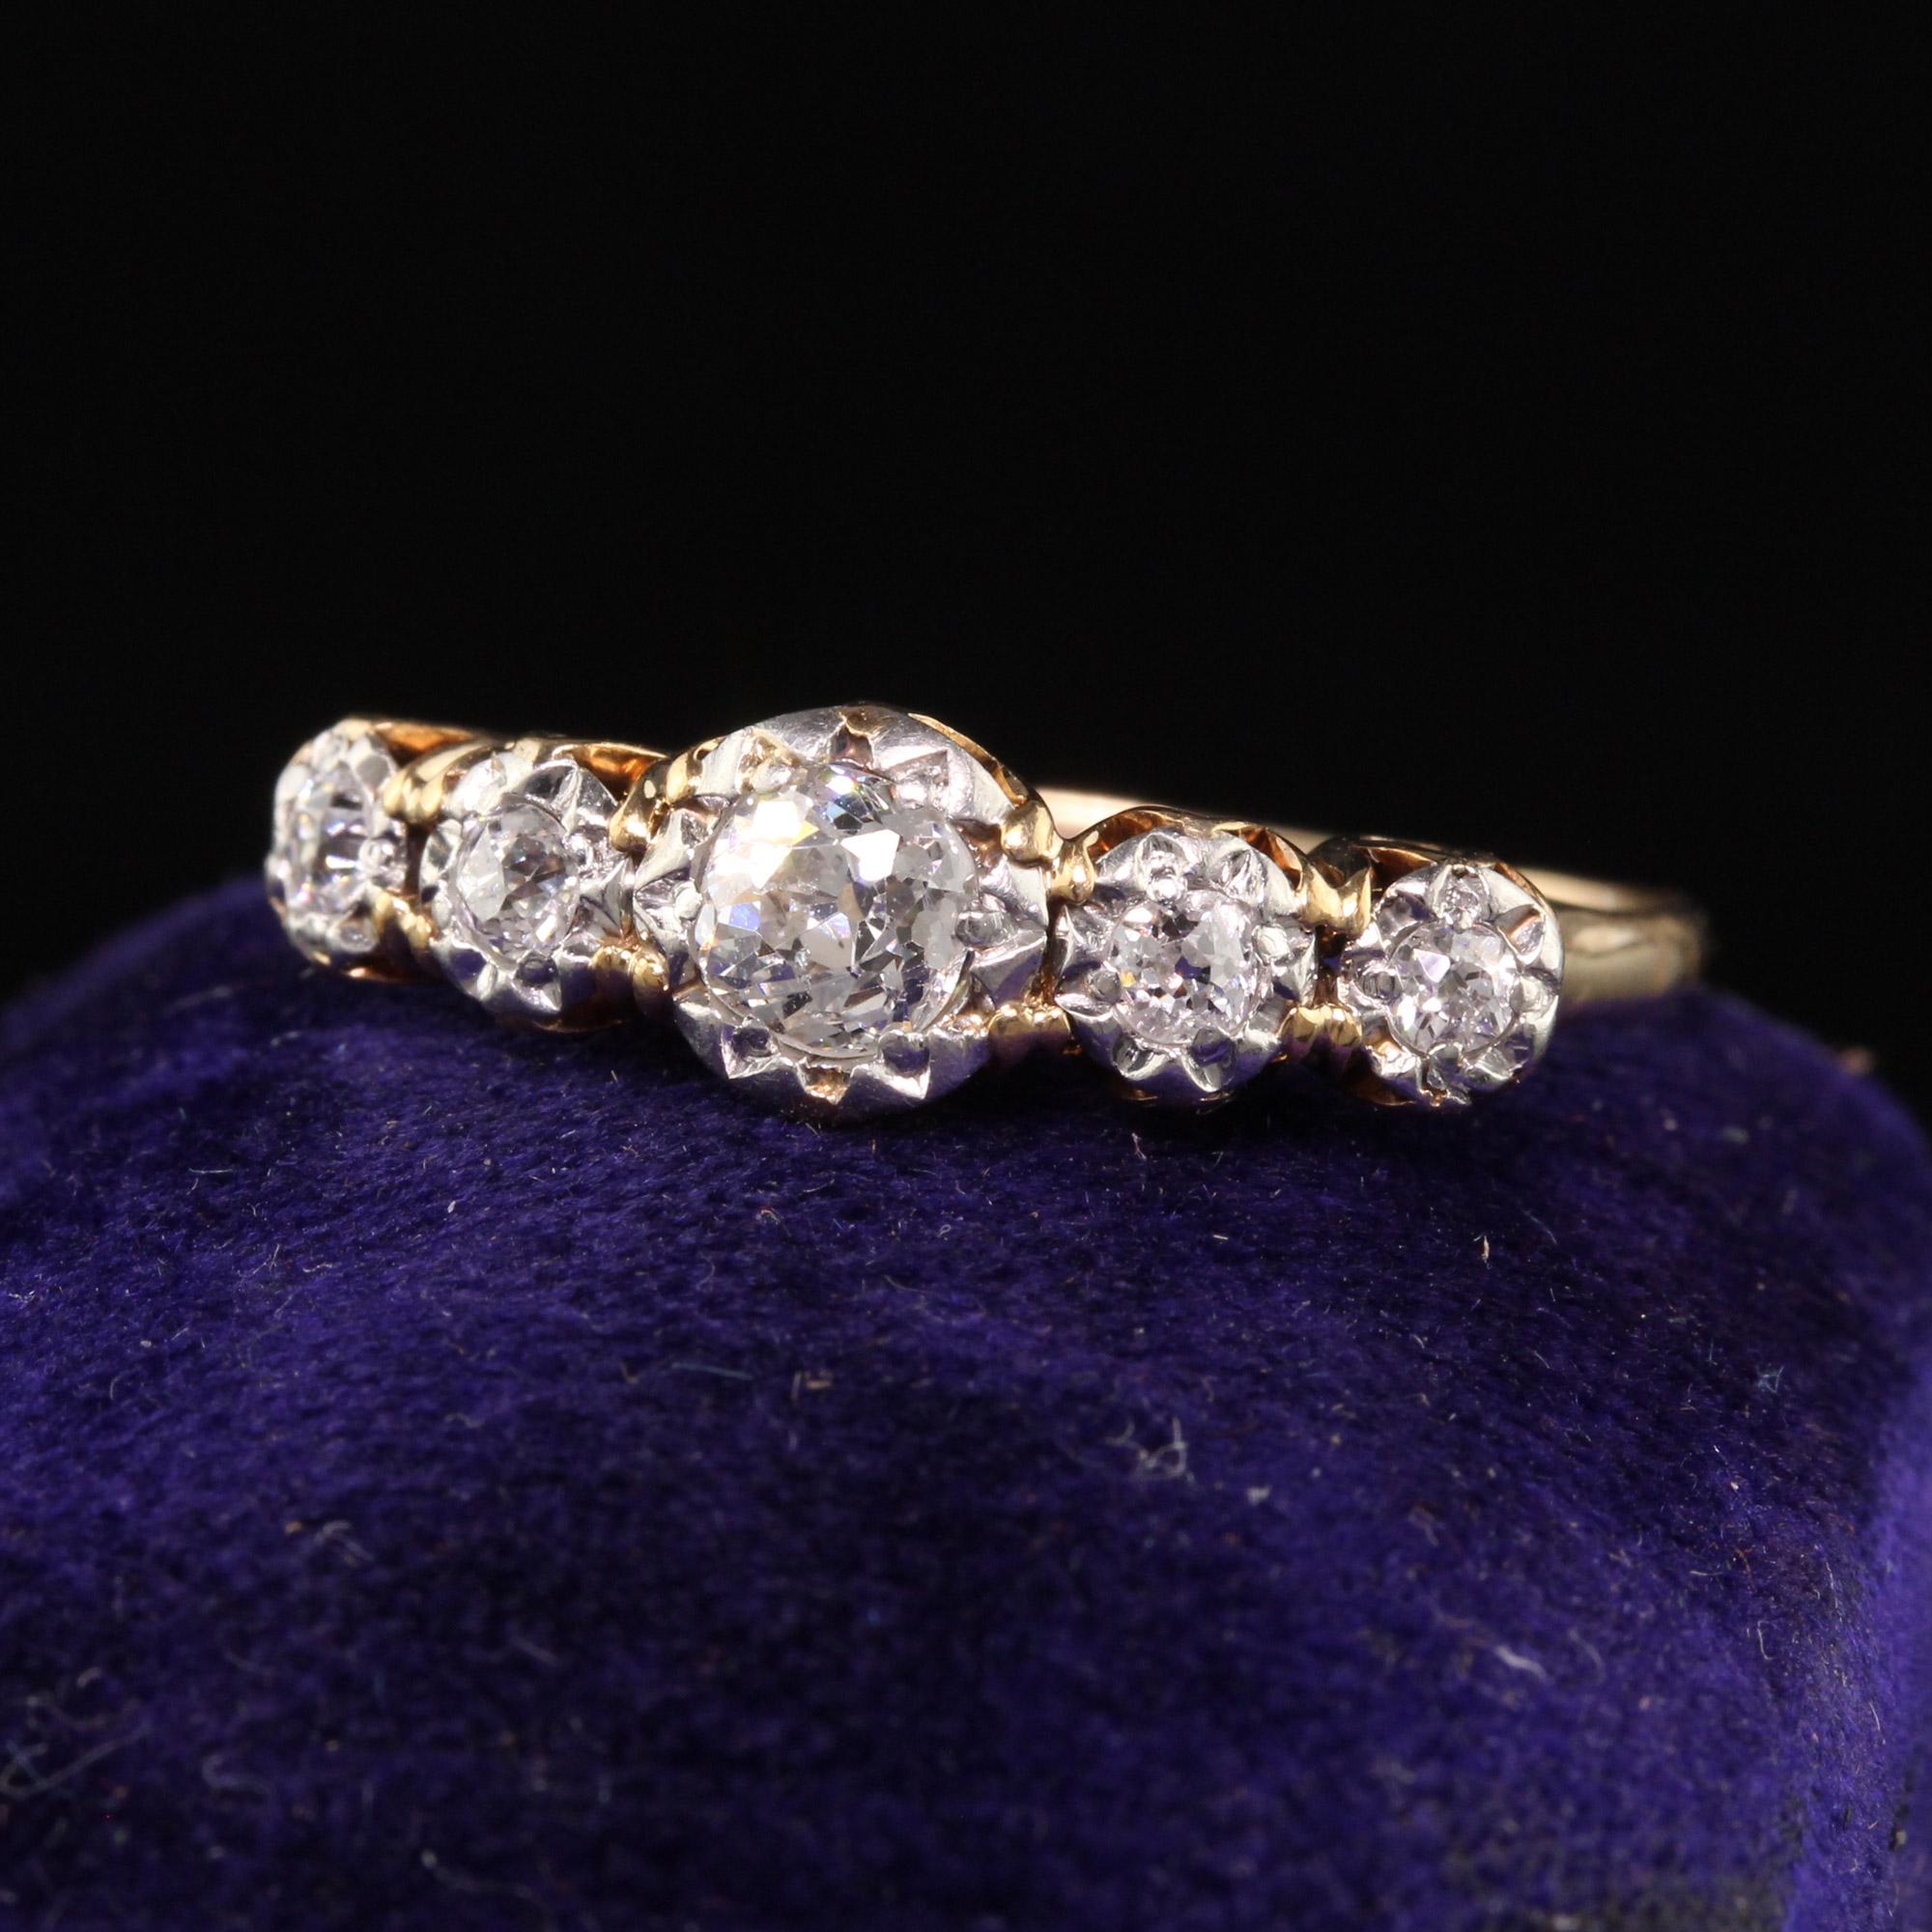 Beautiful Antique Art Deco 14K Yellow Gold Old Mine Diamond Five Stone Ring. This beautiful ring features 5 old mine cut diamonds in an art deco yellow gold setting.

Item #R1078

Metal: 14K Yellow Gold

Weight: 2.6 Grams

Size: 7 1/2

Diamonds: